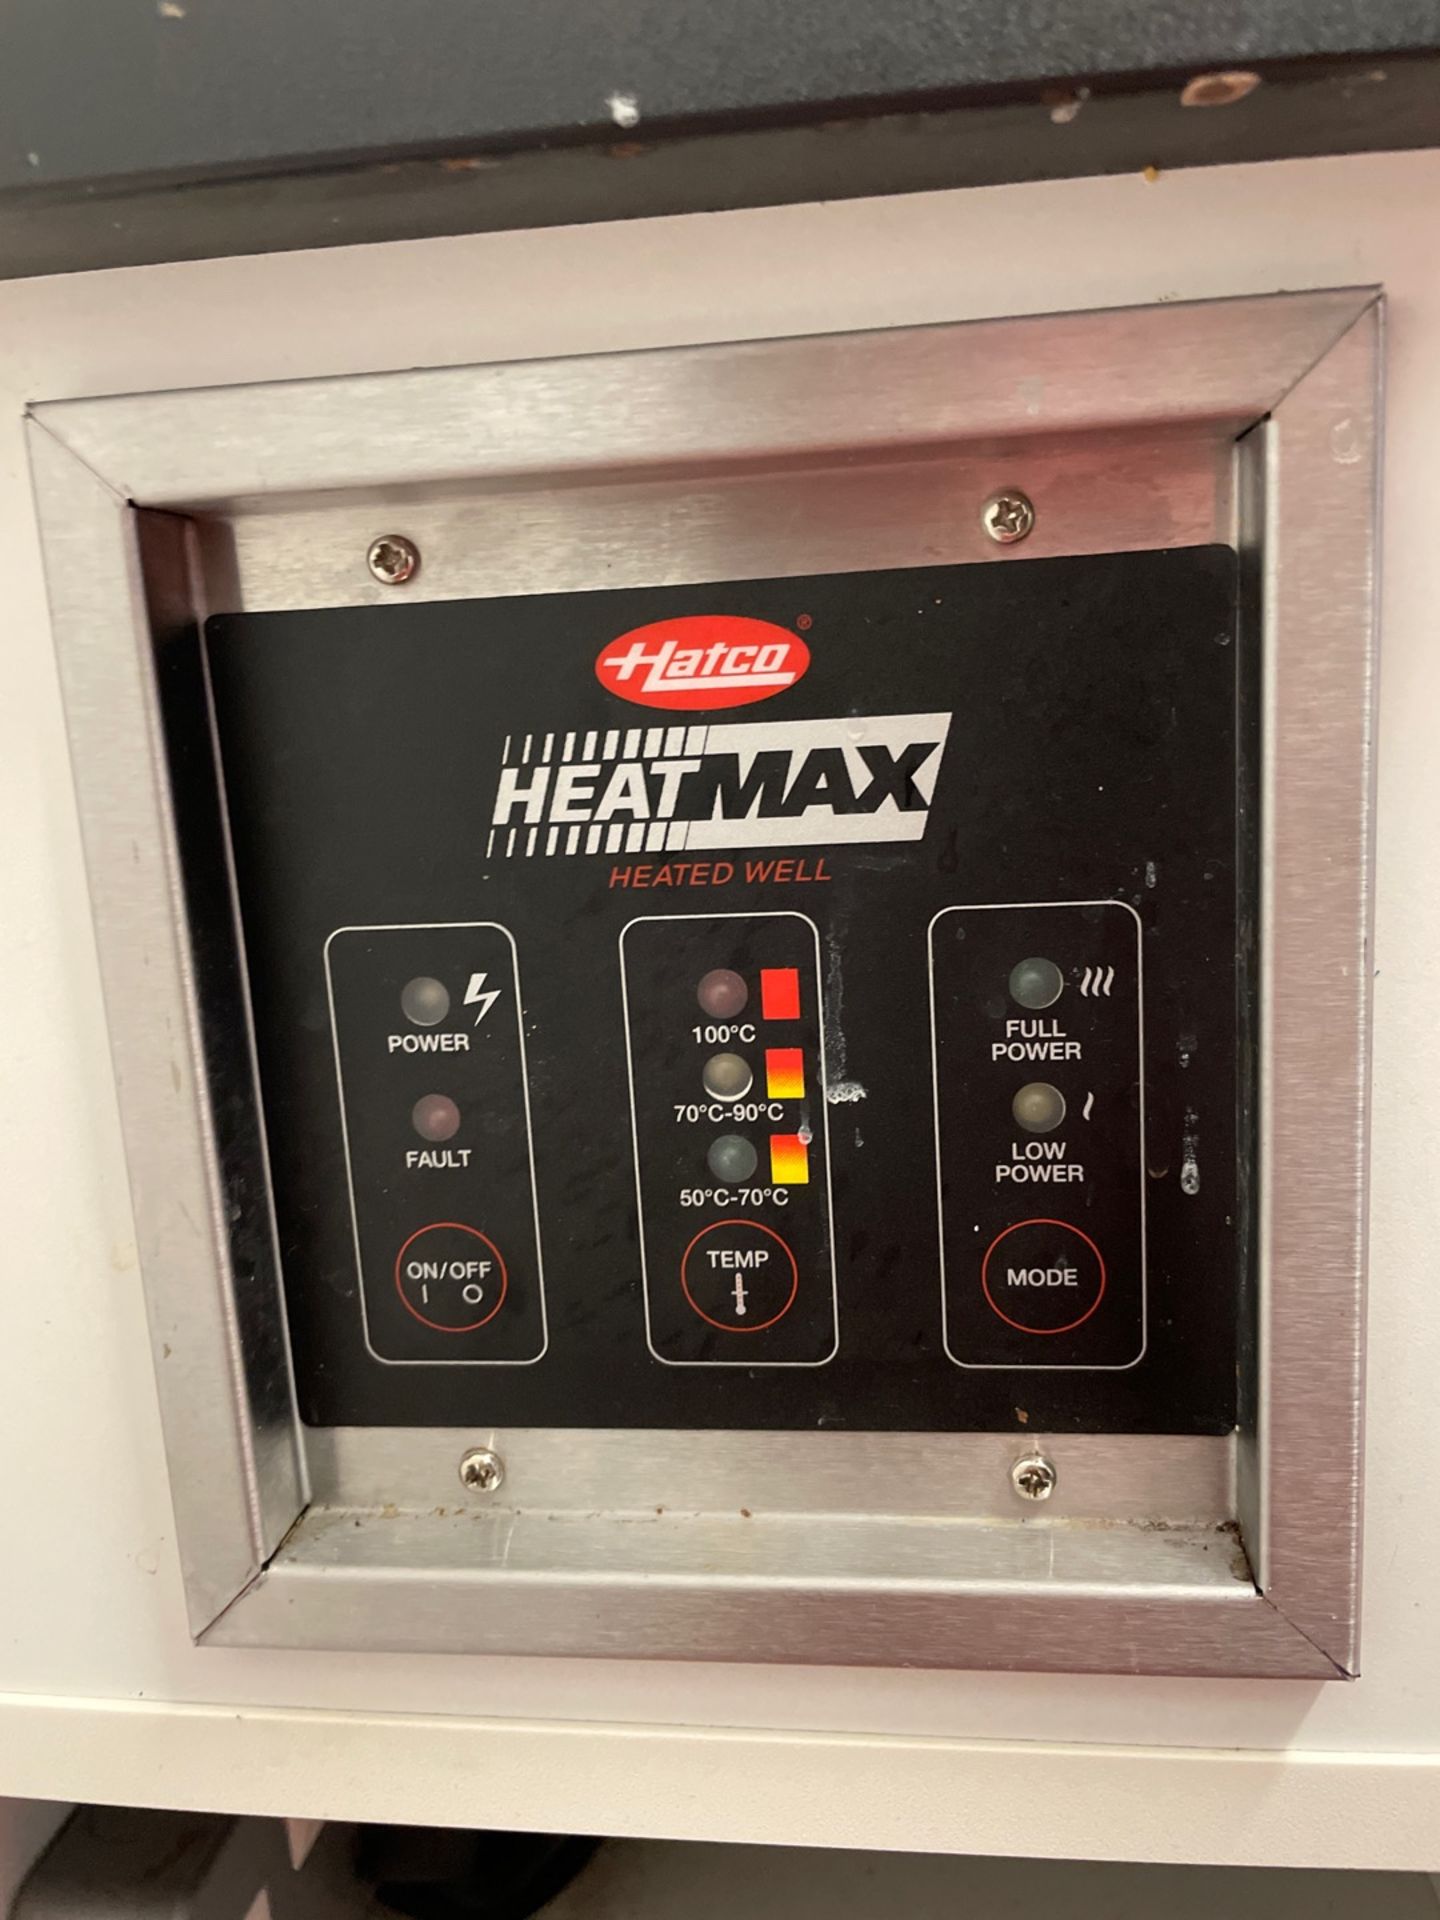 Hatco HeatMax RHW-1 Heated Well - Image 3 of 3